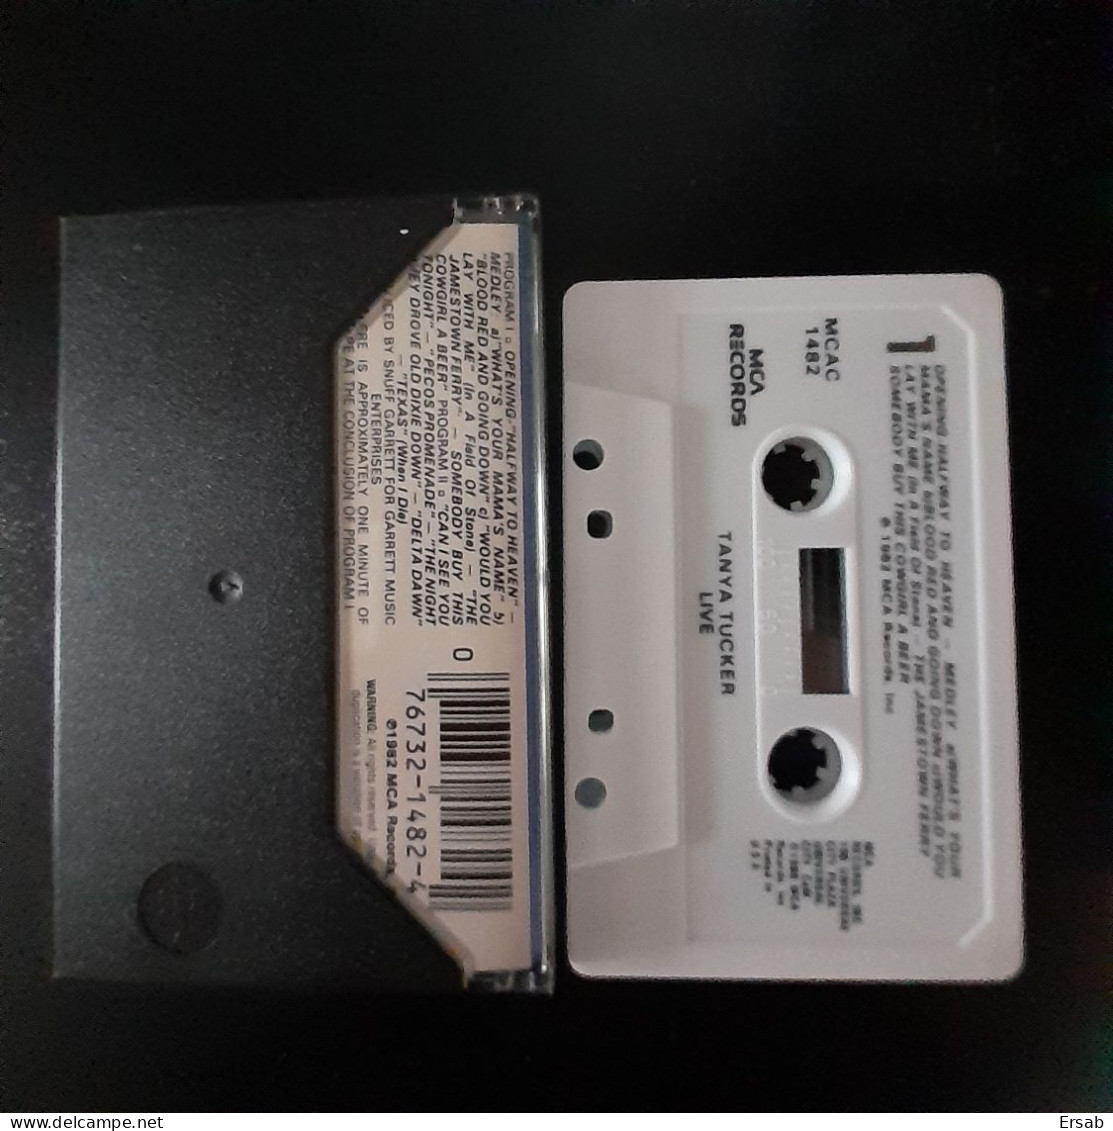 Lot 26 cassettes audio divers K7 country music rock & roll pop tape MC